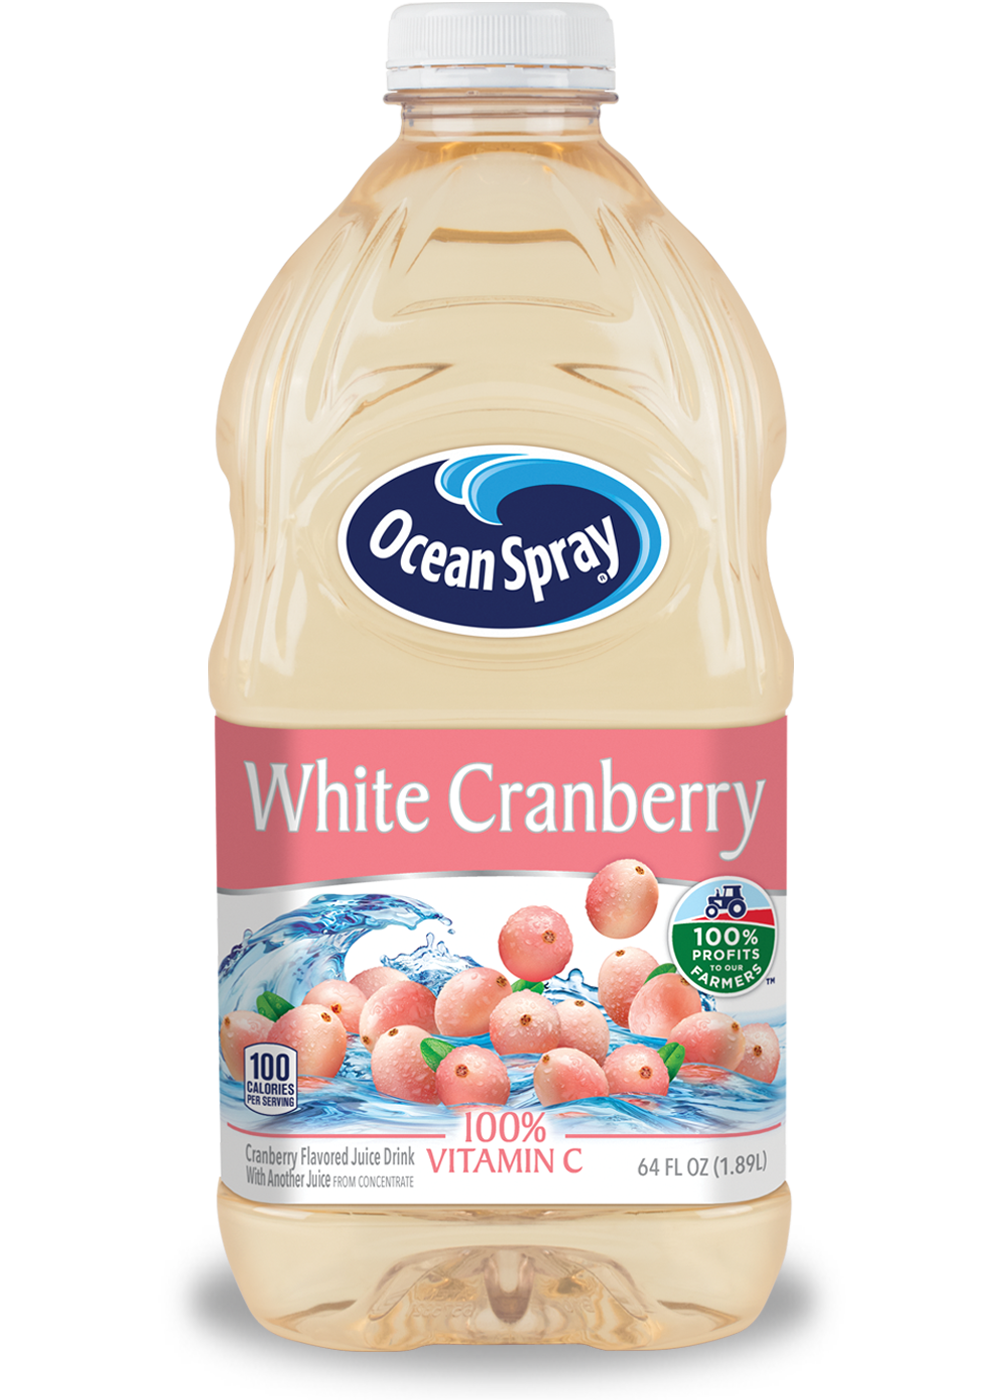 White Cranberry Juice Drink.ashx